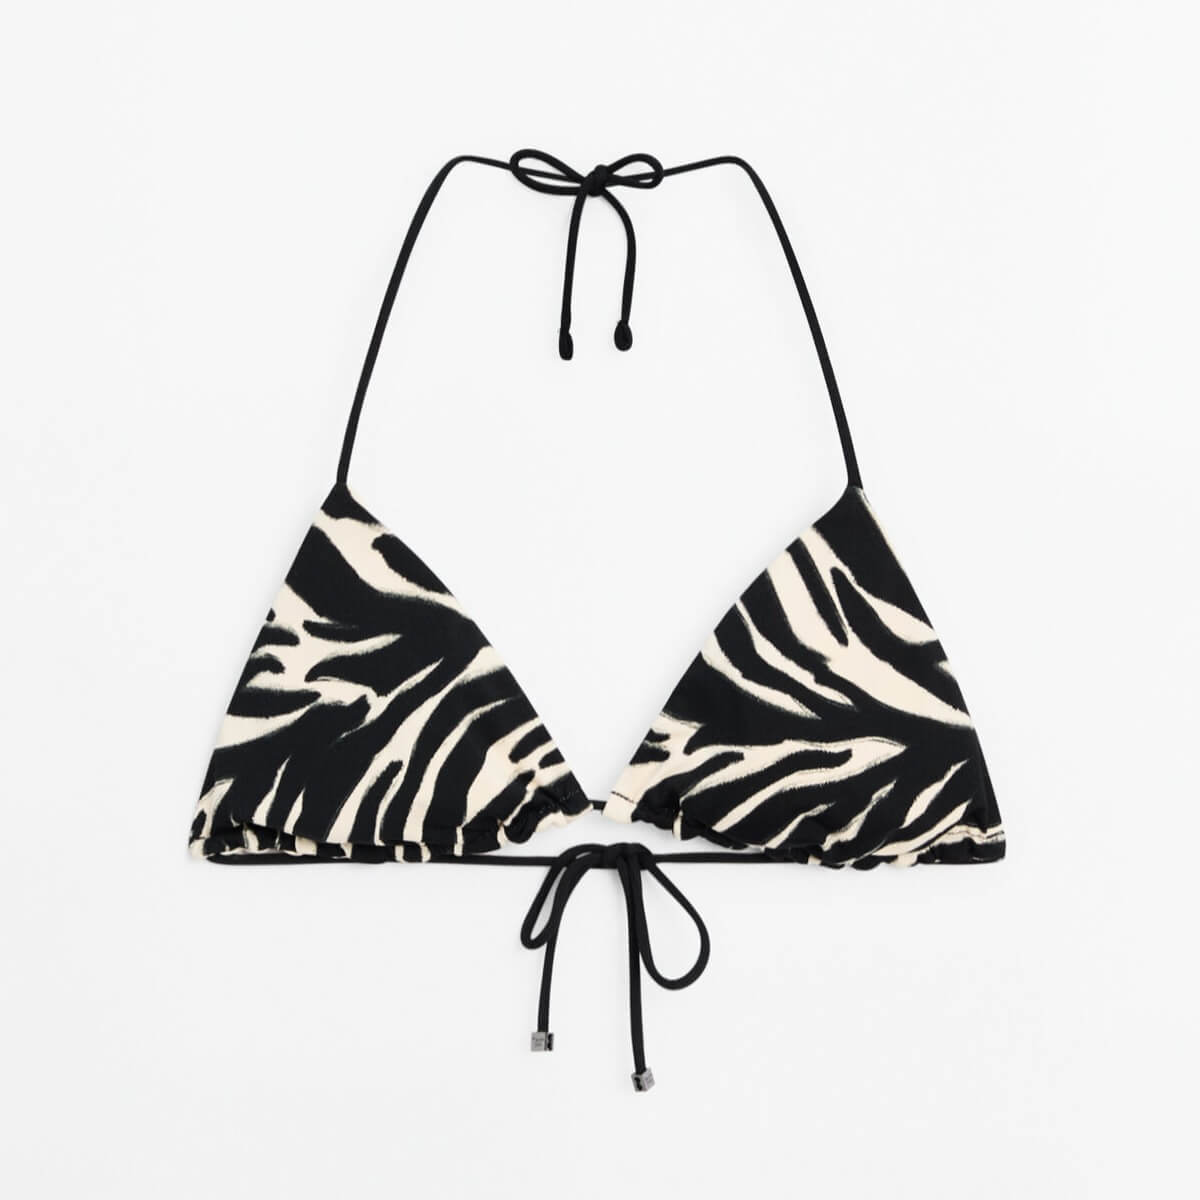 Верх купальника Massimo Dutti Printed Triangle Bikini, черный/белый цена и фото